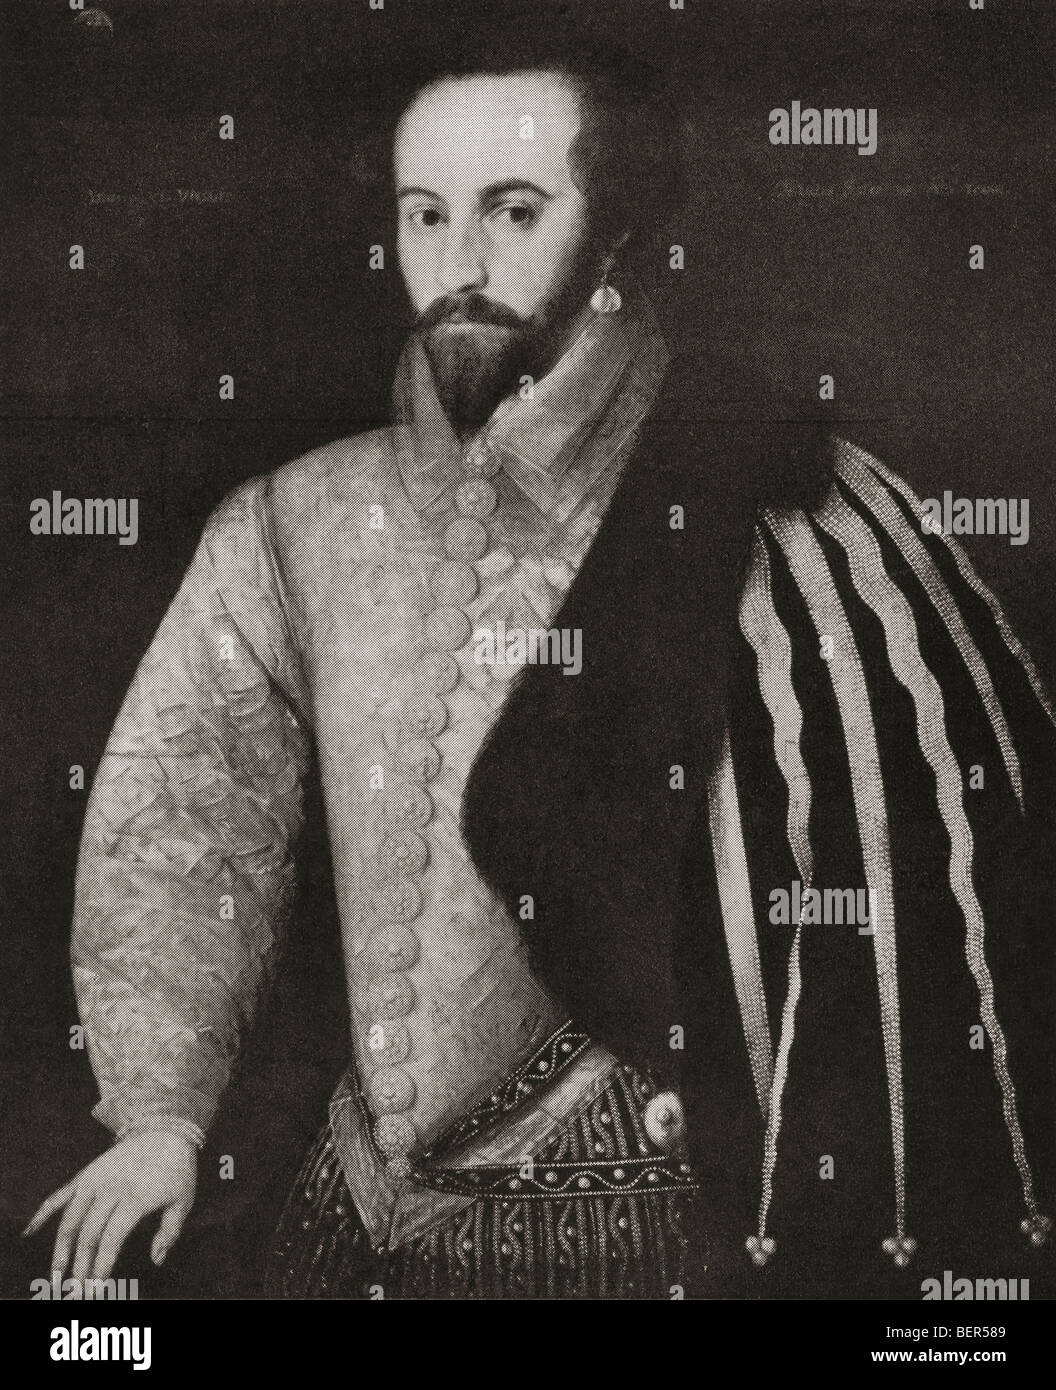 Sir Walter Raleigh, Lord Lieutenant de Cornwall, ch. 1552 à 1618. Banque D'Images